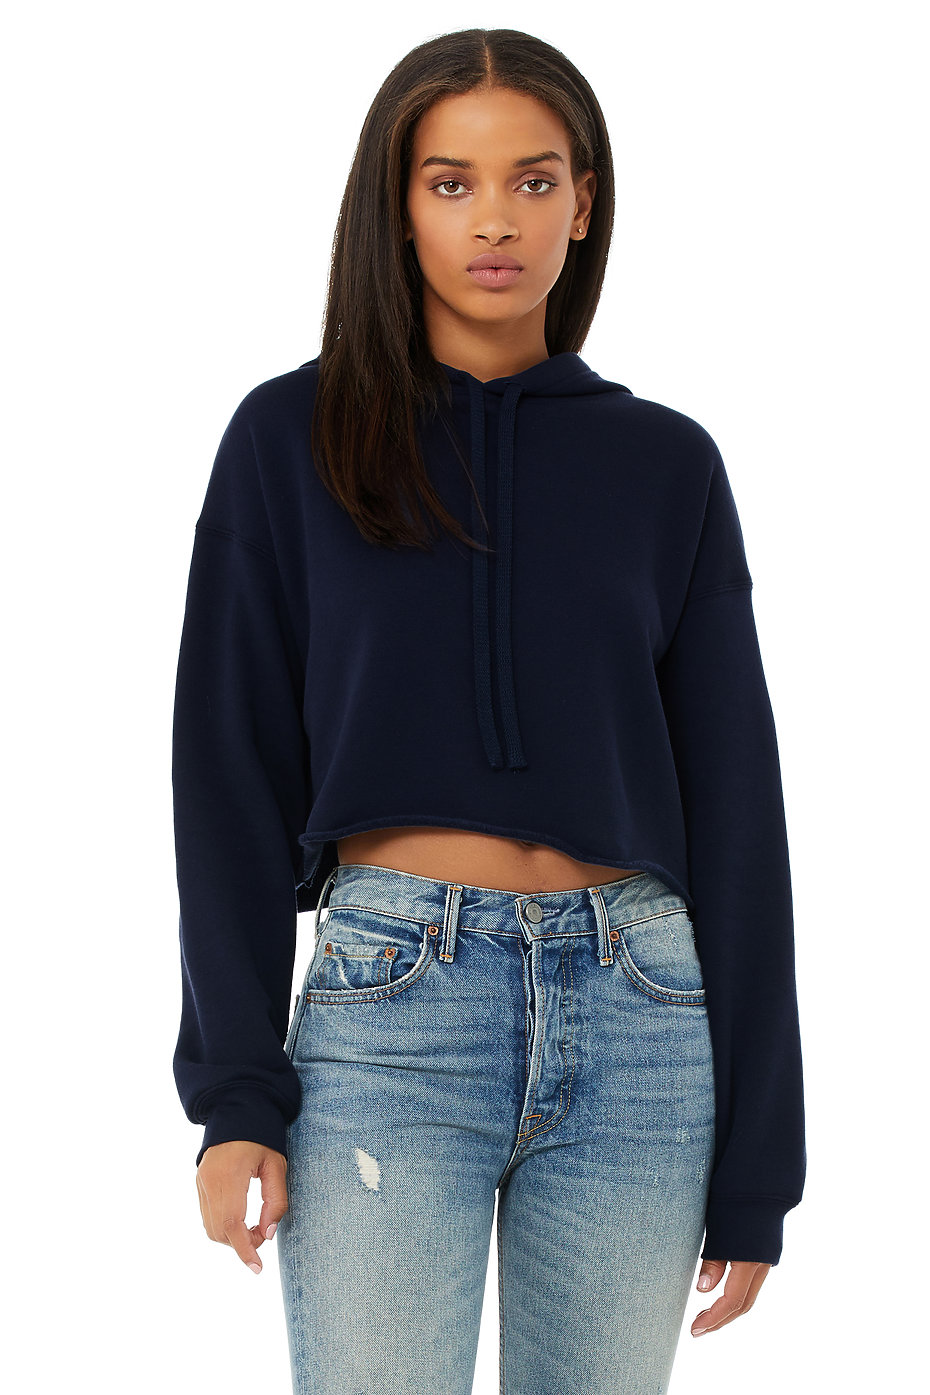 Plywood Texture Womens Long Sleeve Pullover Hooded Sweatshirt Top Hoodie with Fleece Lining 